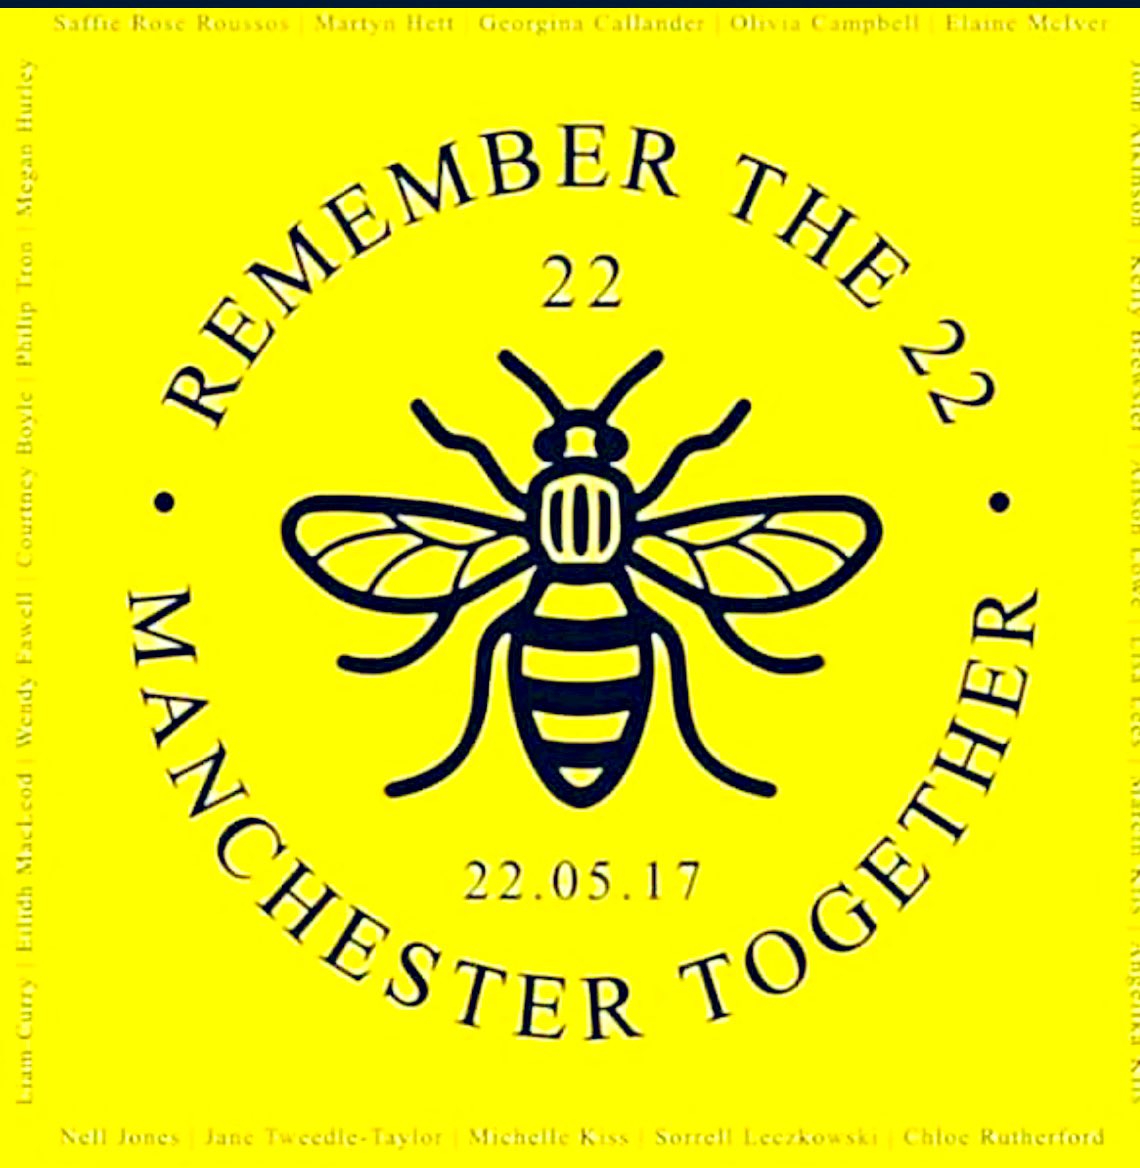 #Manchester22 #ManchesterArena